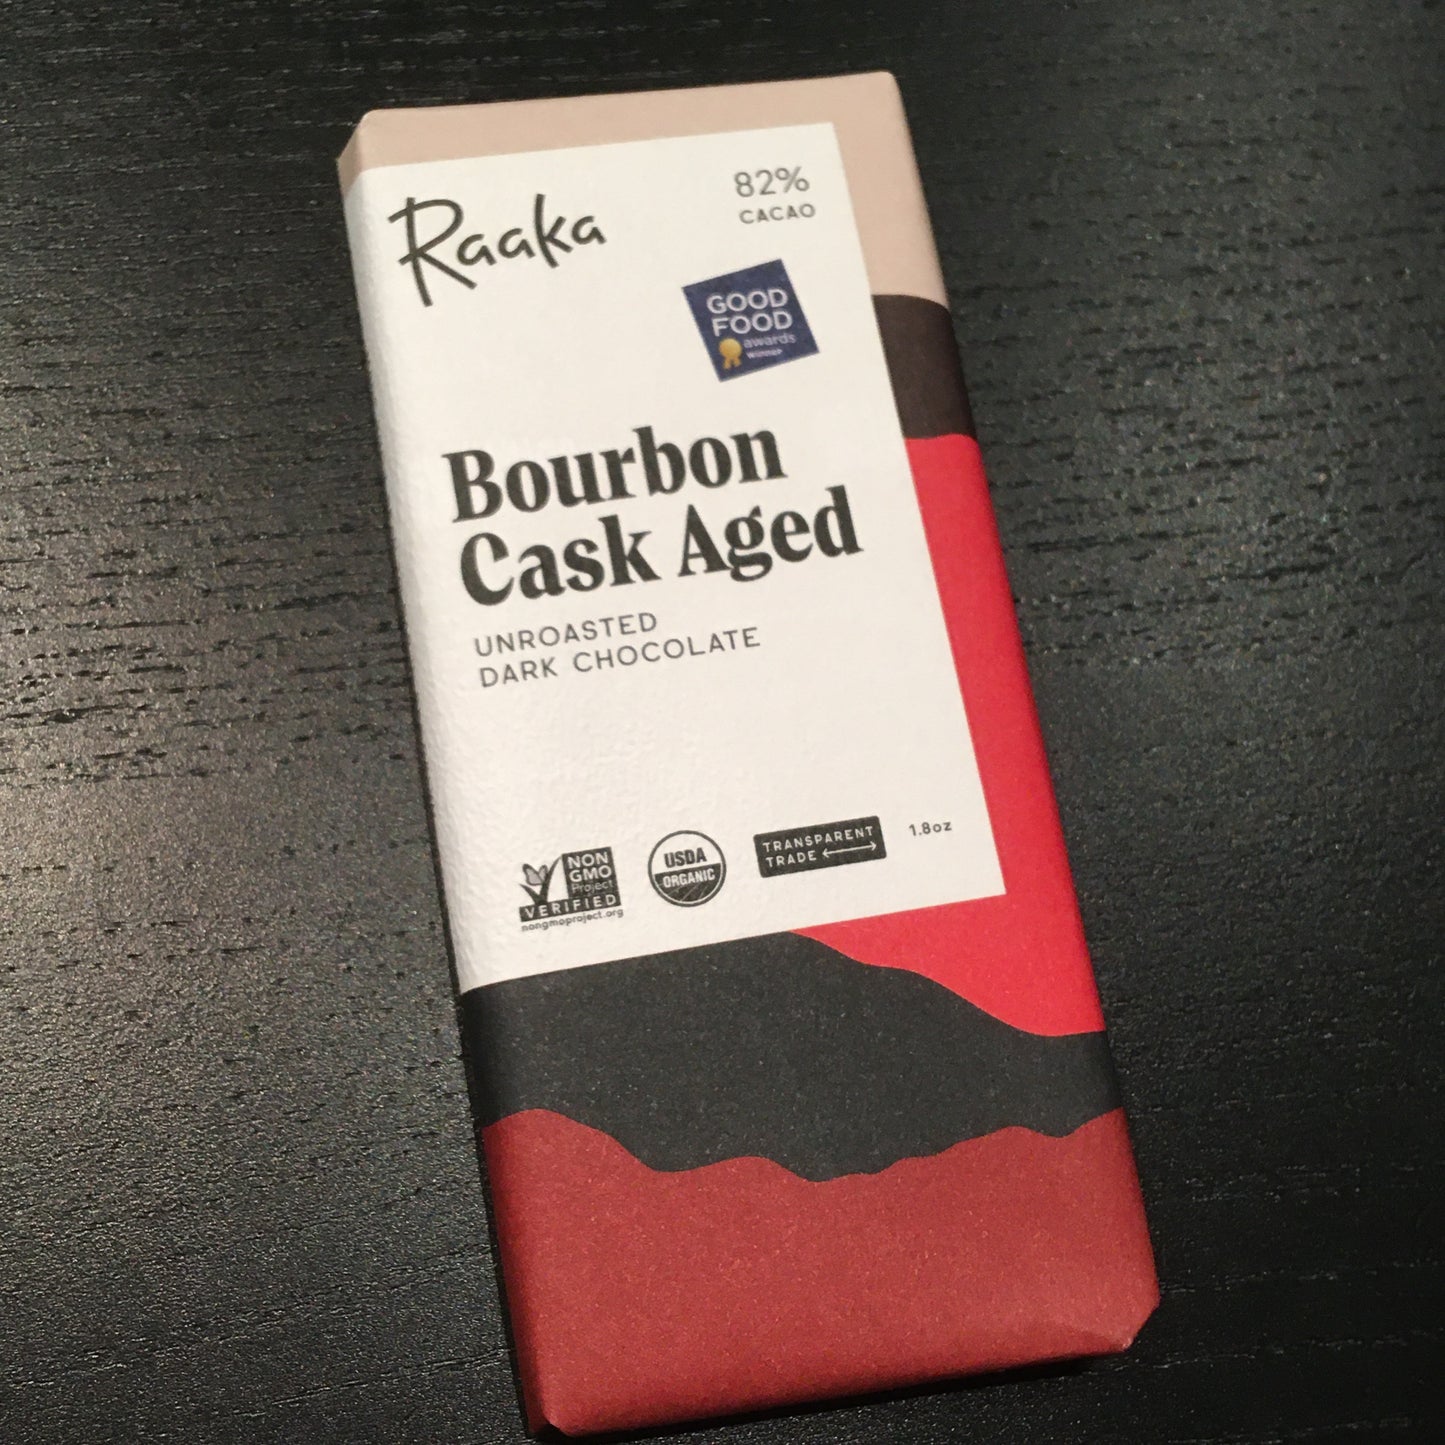 Raaka - Bourbon Cask Aged - 82% Dark Chocolate